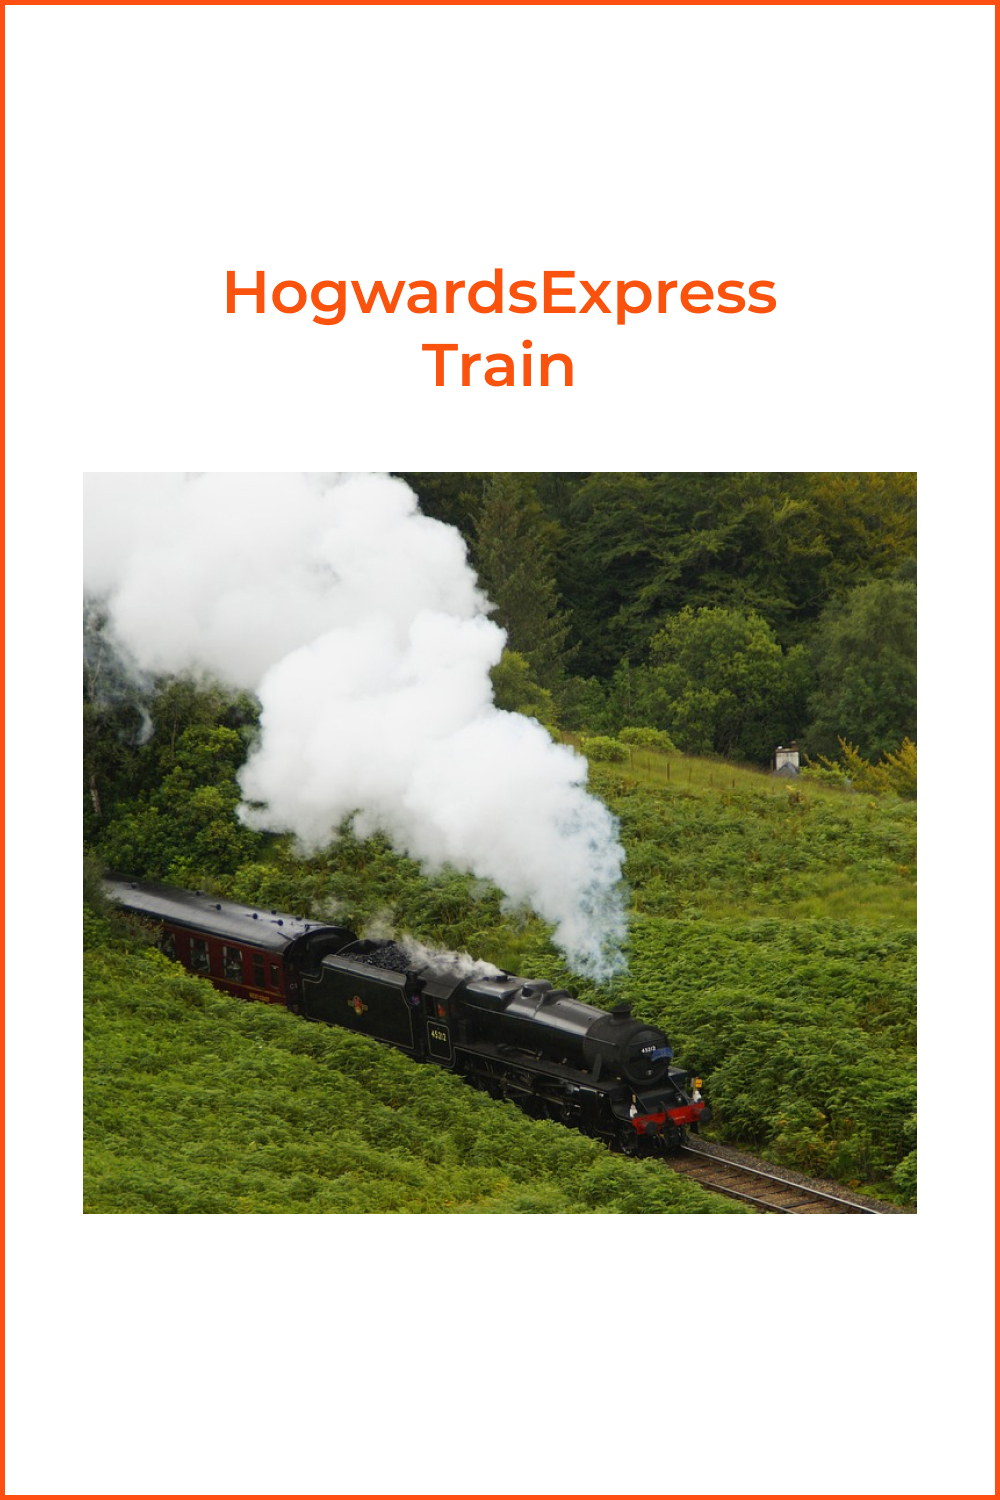 41 hogwardsexpress train 704